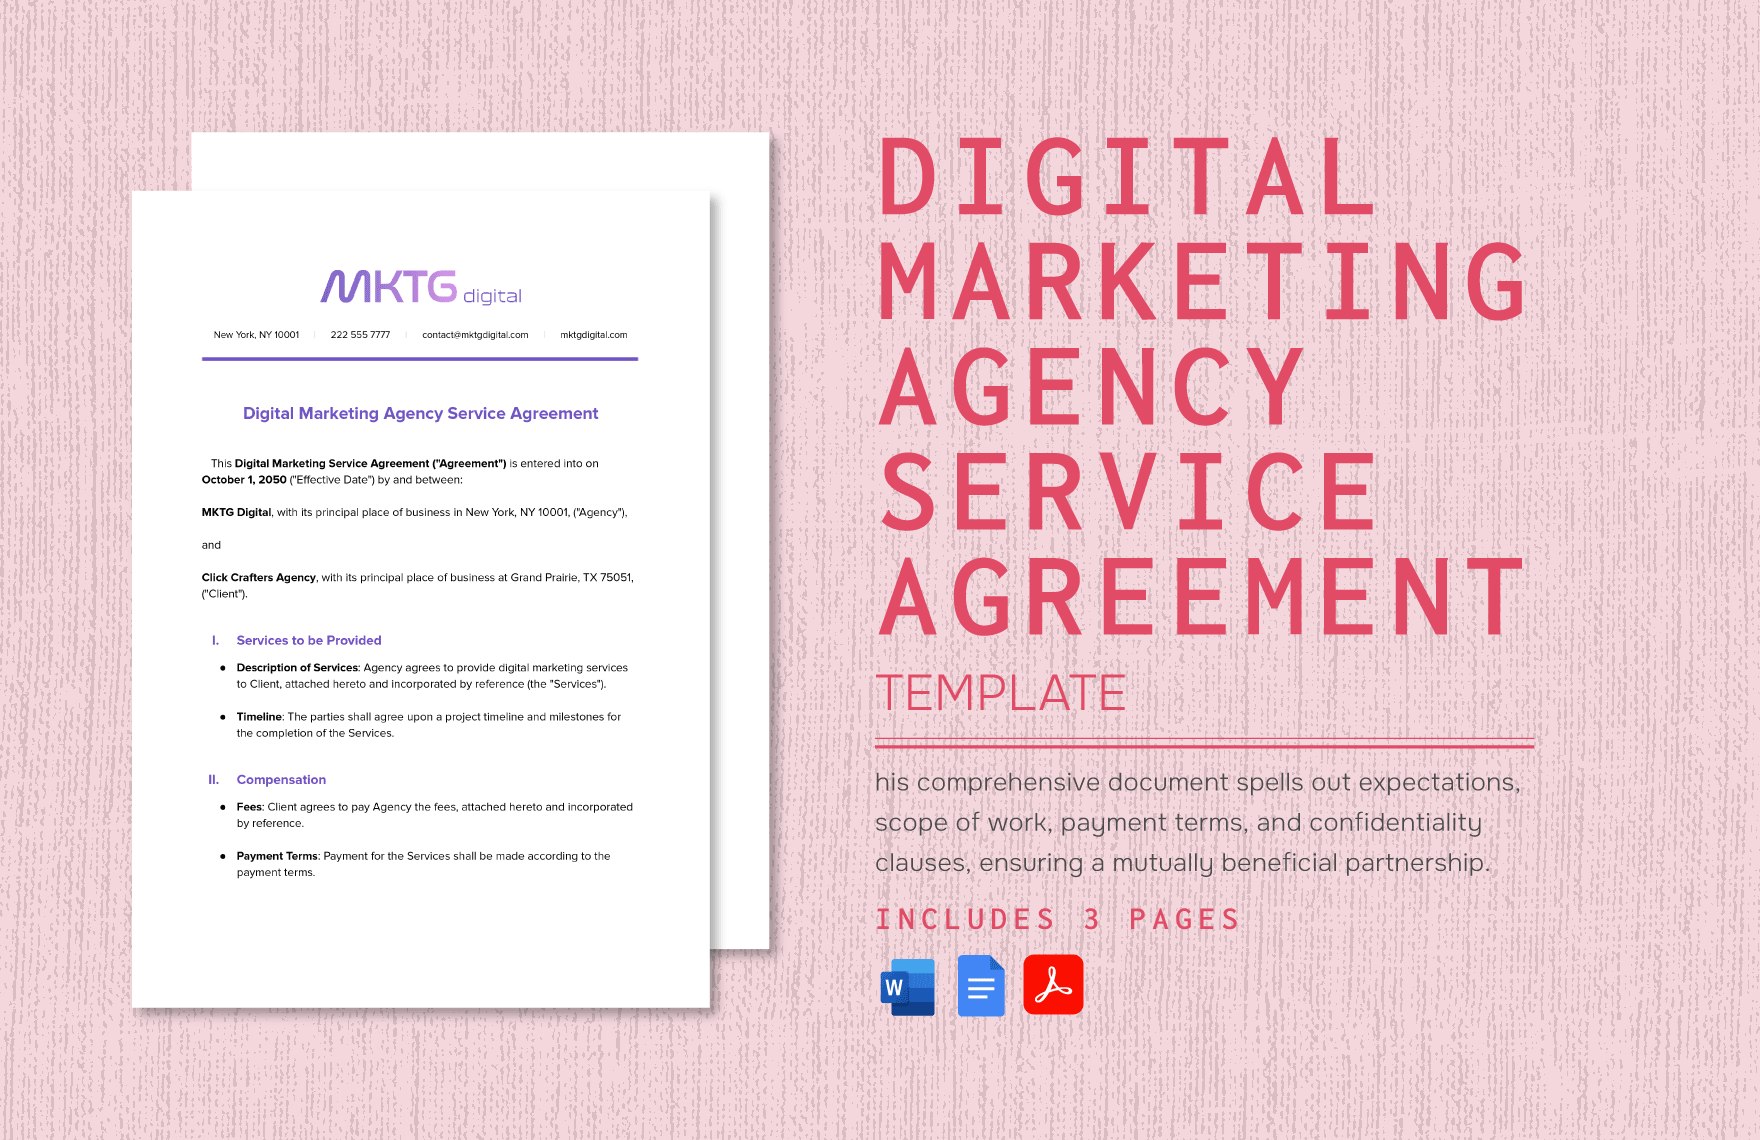 Digital Marketing Agency Service Agreement Template in Word, Google Docs, PDF